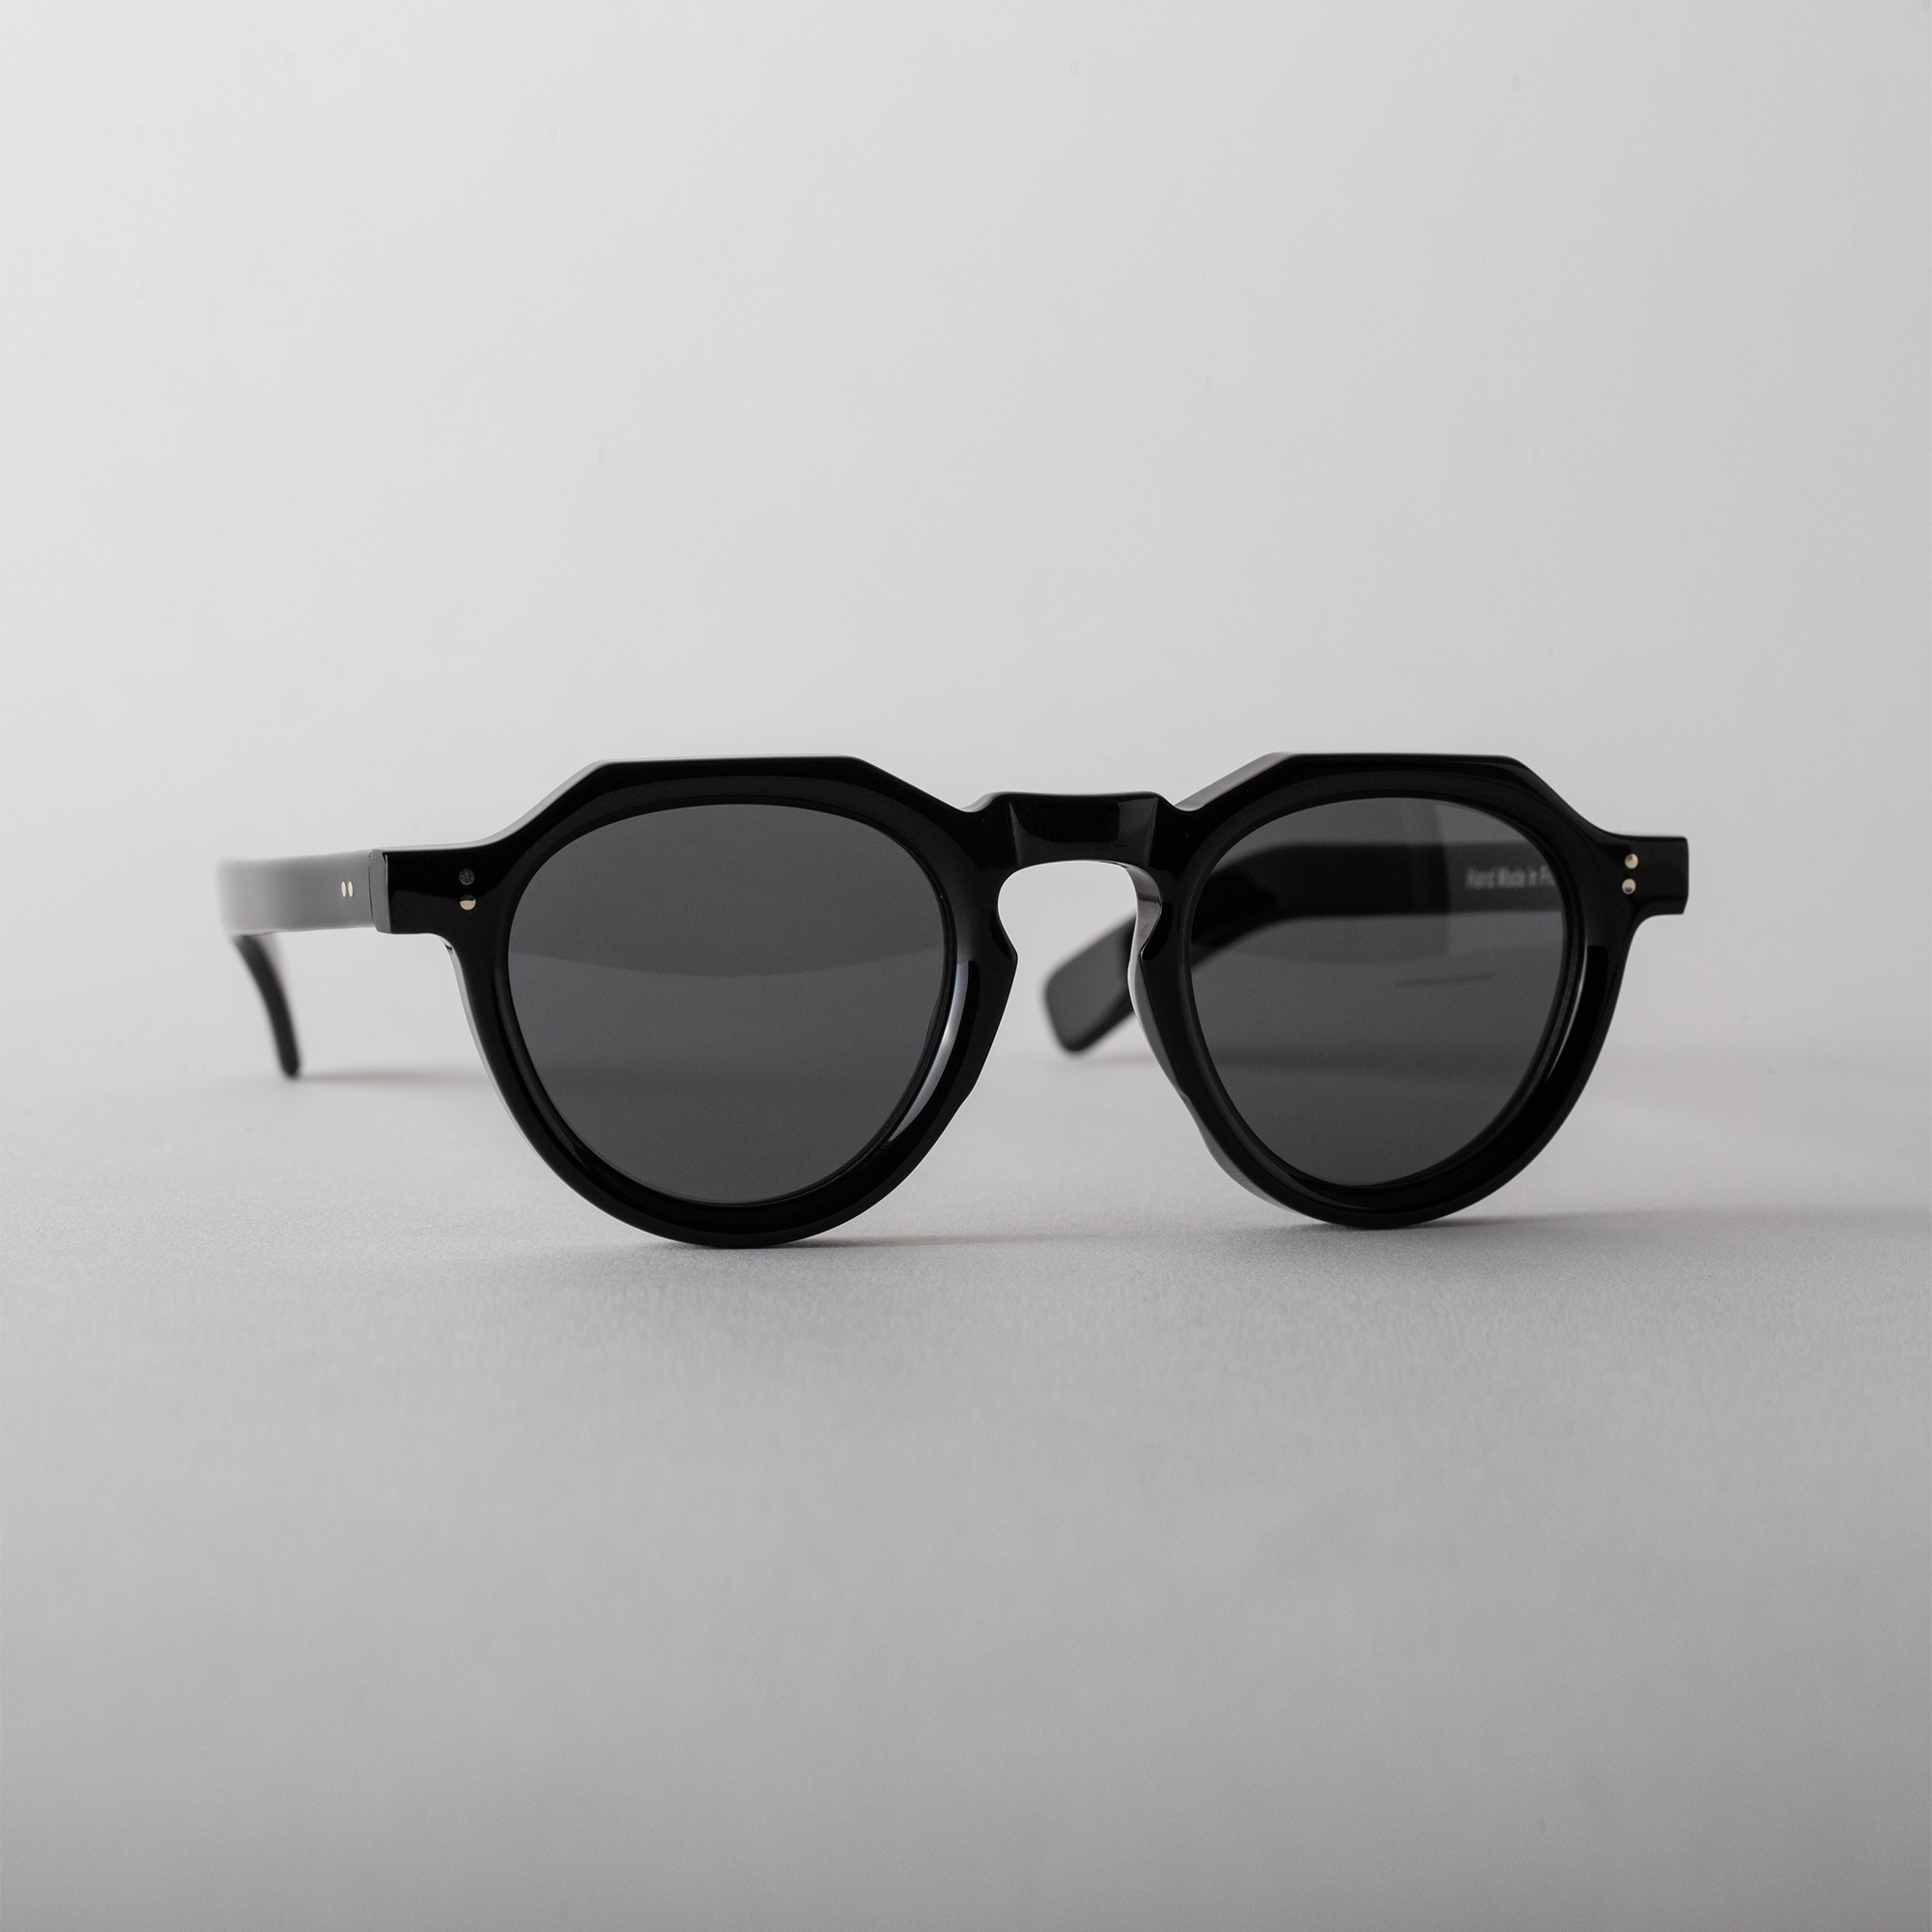 Sunglasses MOD.01 in Black color by Arpenteur